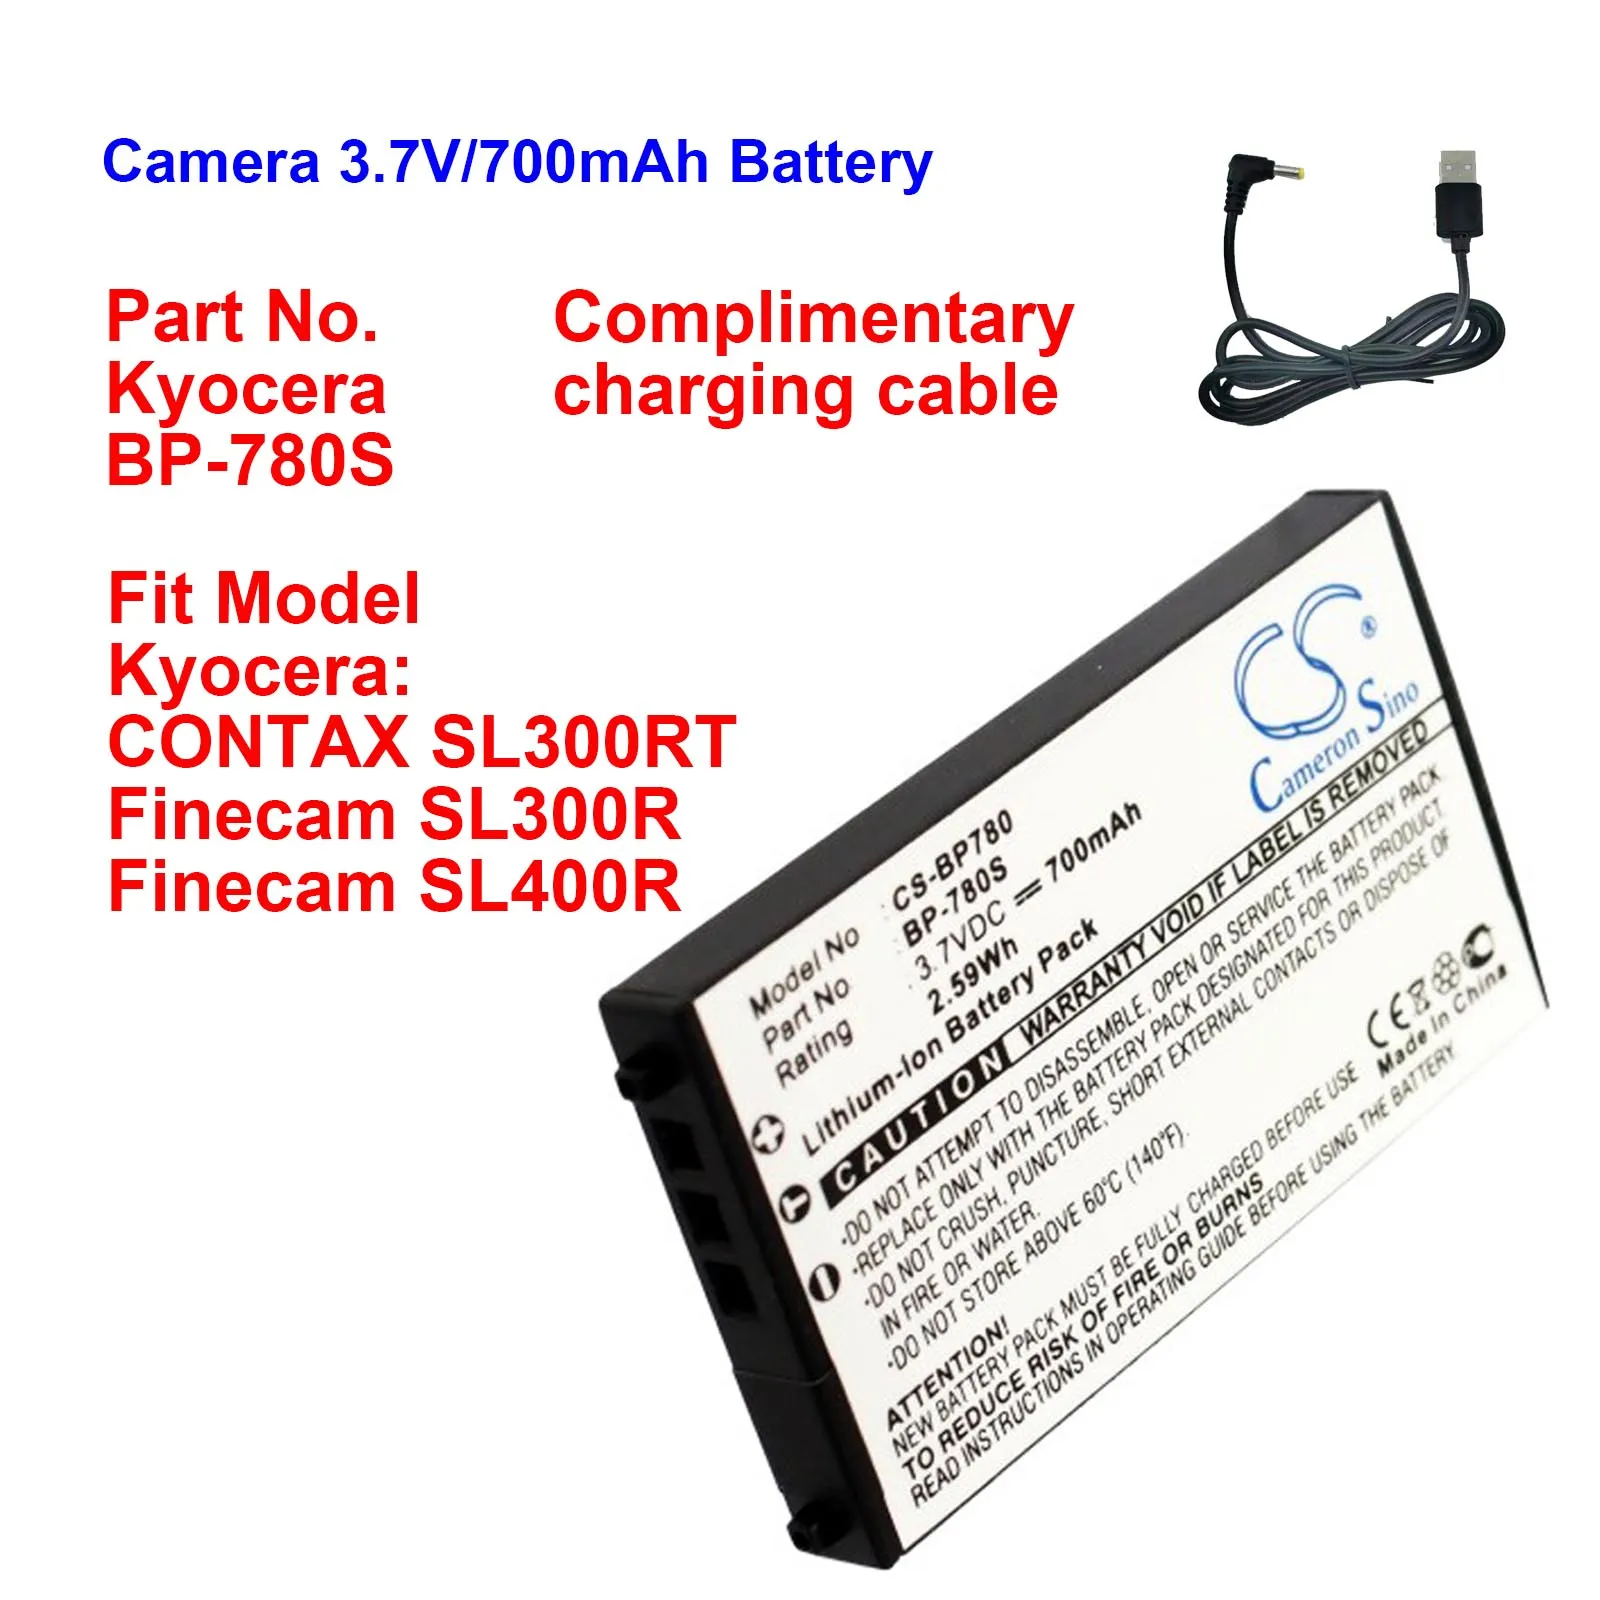 

700mAh Battery For Kyocera CONTAX SL300RT Finecam SL300R SL400R BP-780S Cameron Sino